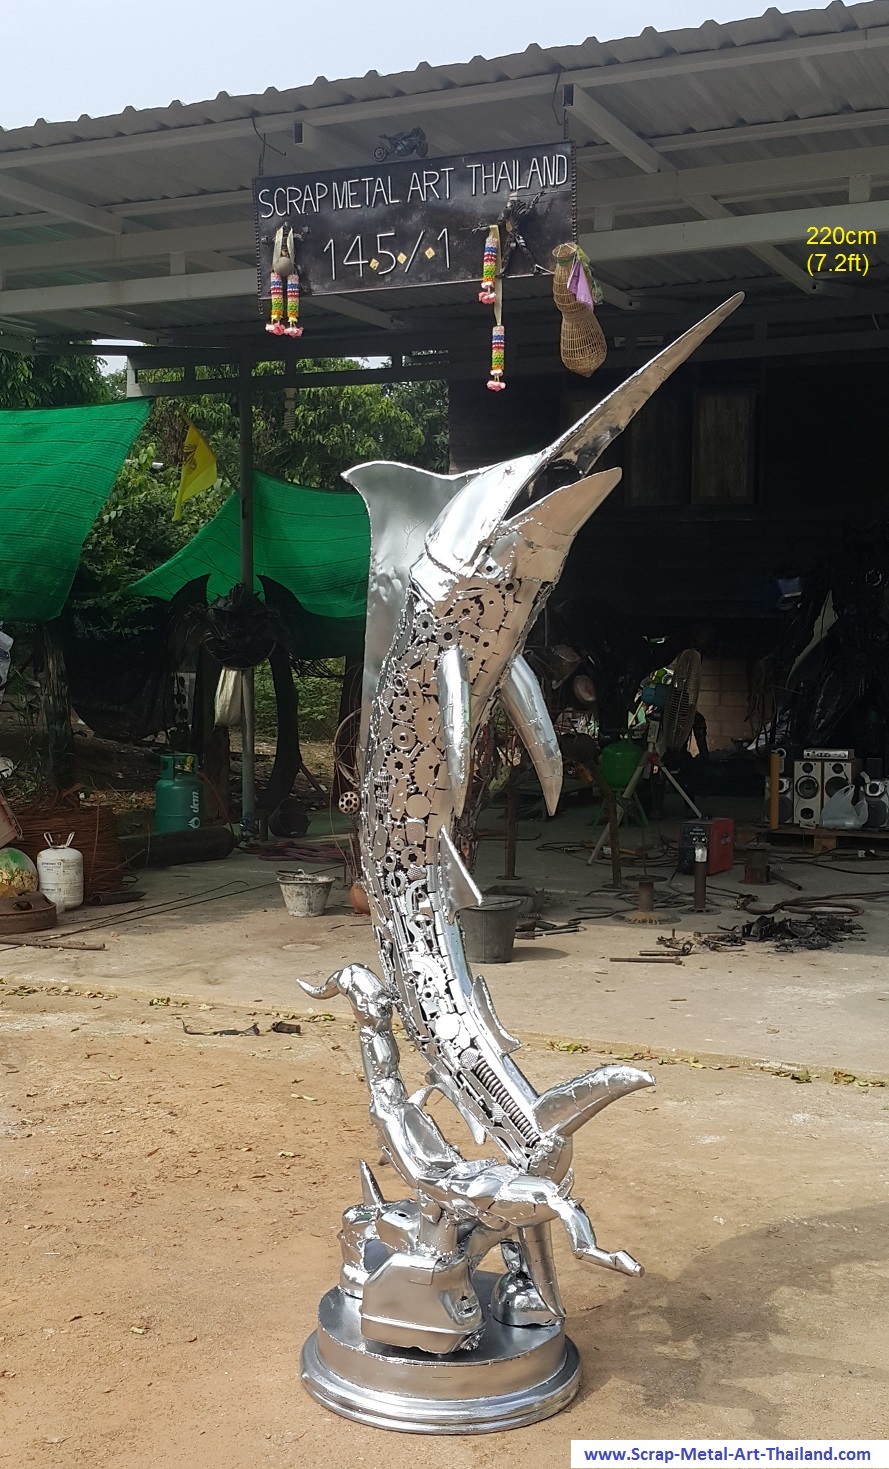 Blue Marlin Sculpture Statue for sale, Life Size Metal Animal Sculpture Art